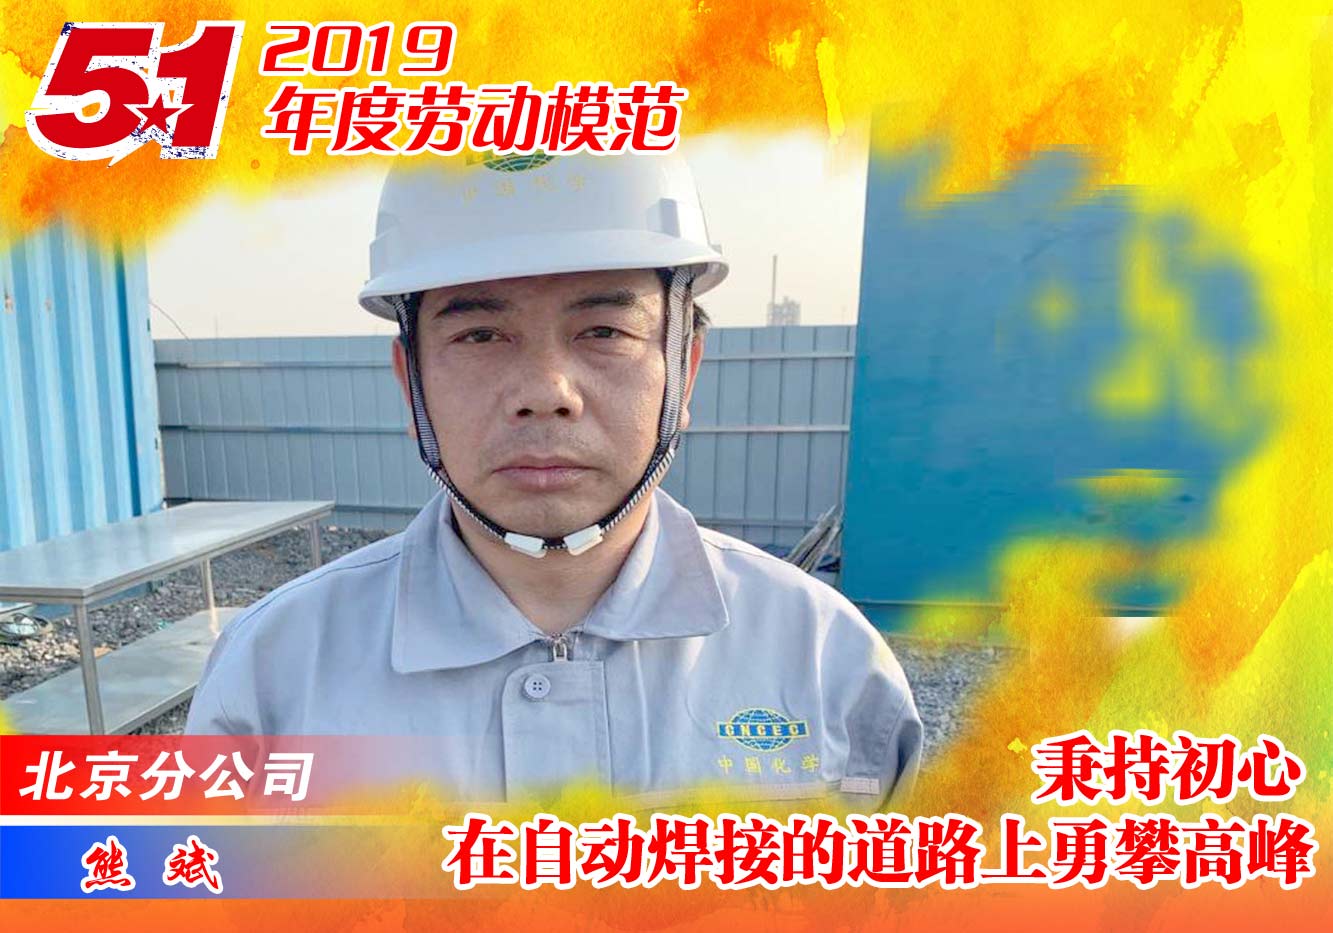 Model employee of 2019: Xiong Bin, Beijing Branch